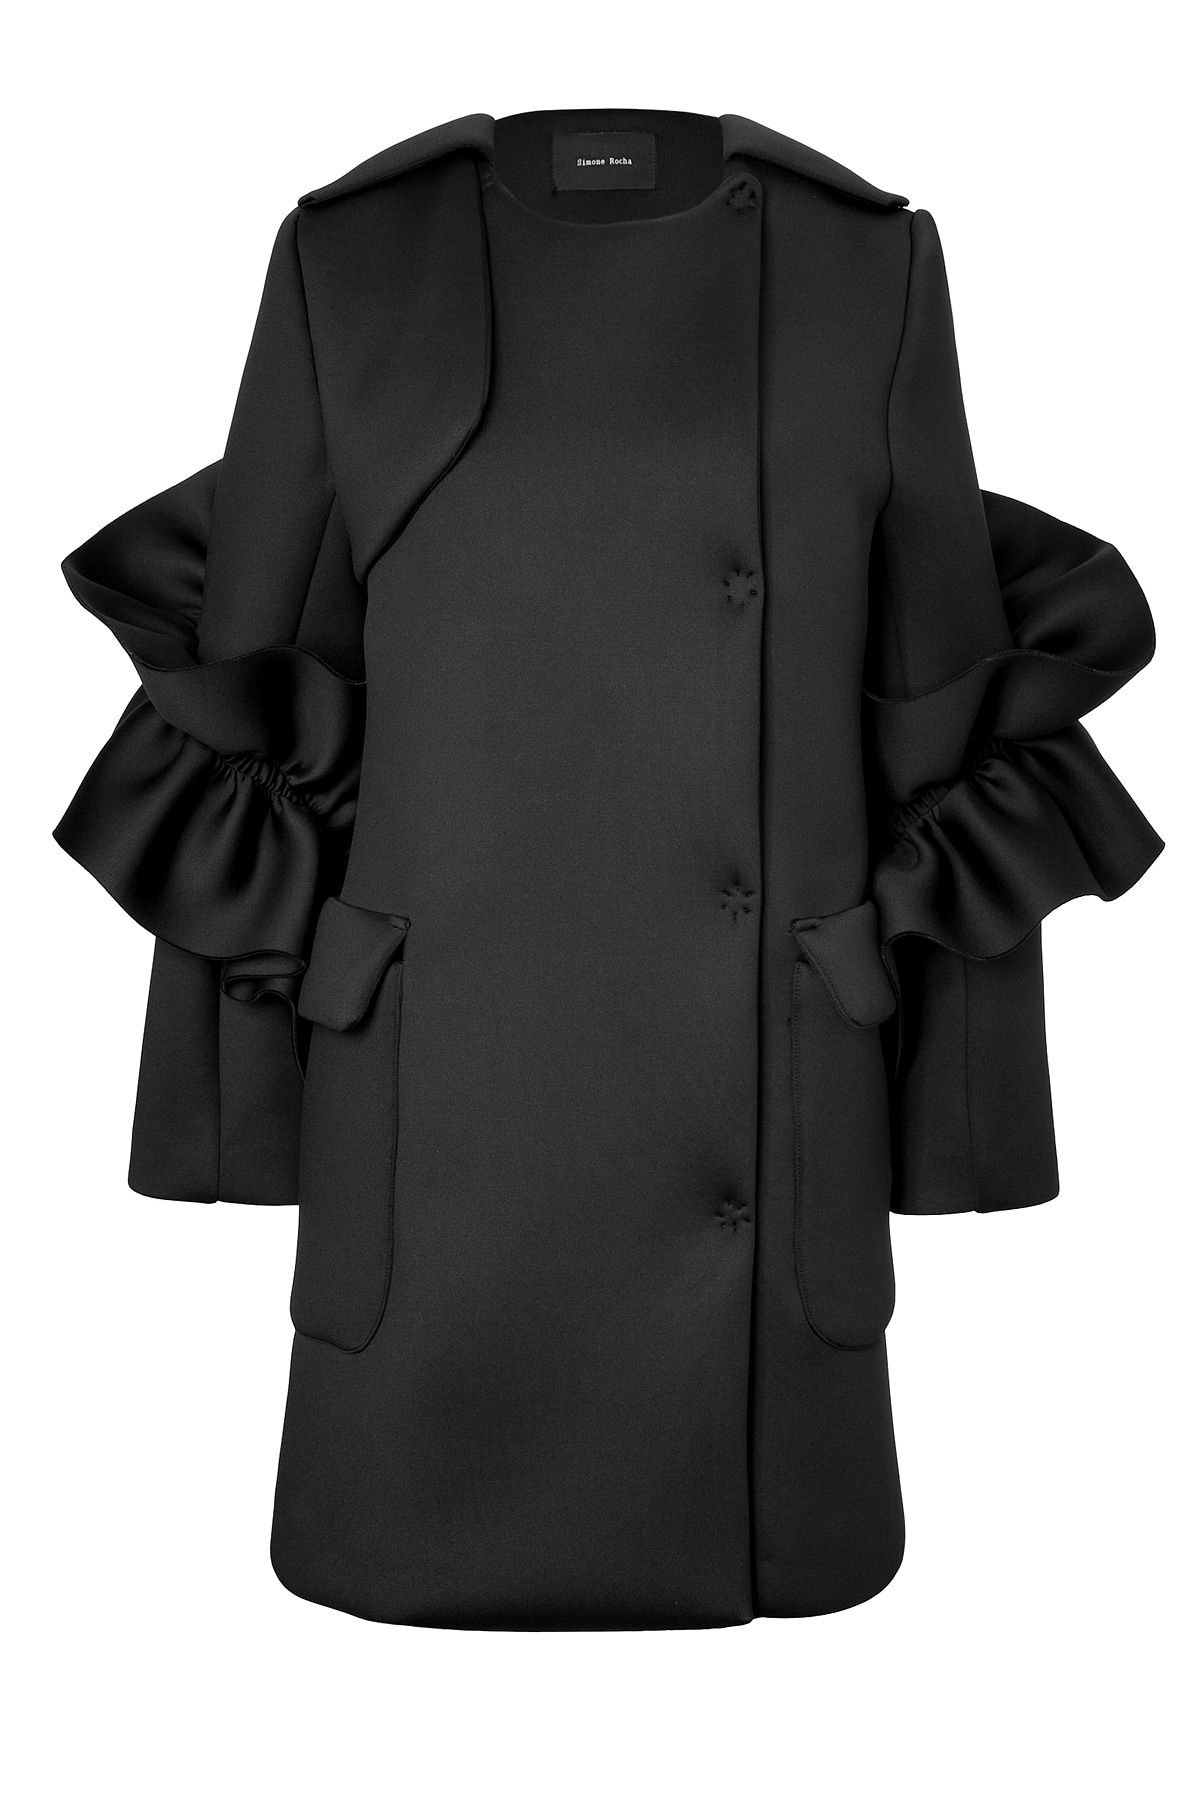 Simone rocha Collarless Coat With Ruffle Sleeves in Black | Lyst